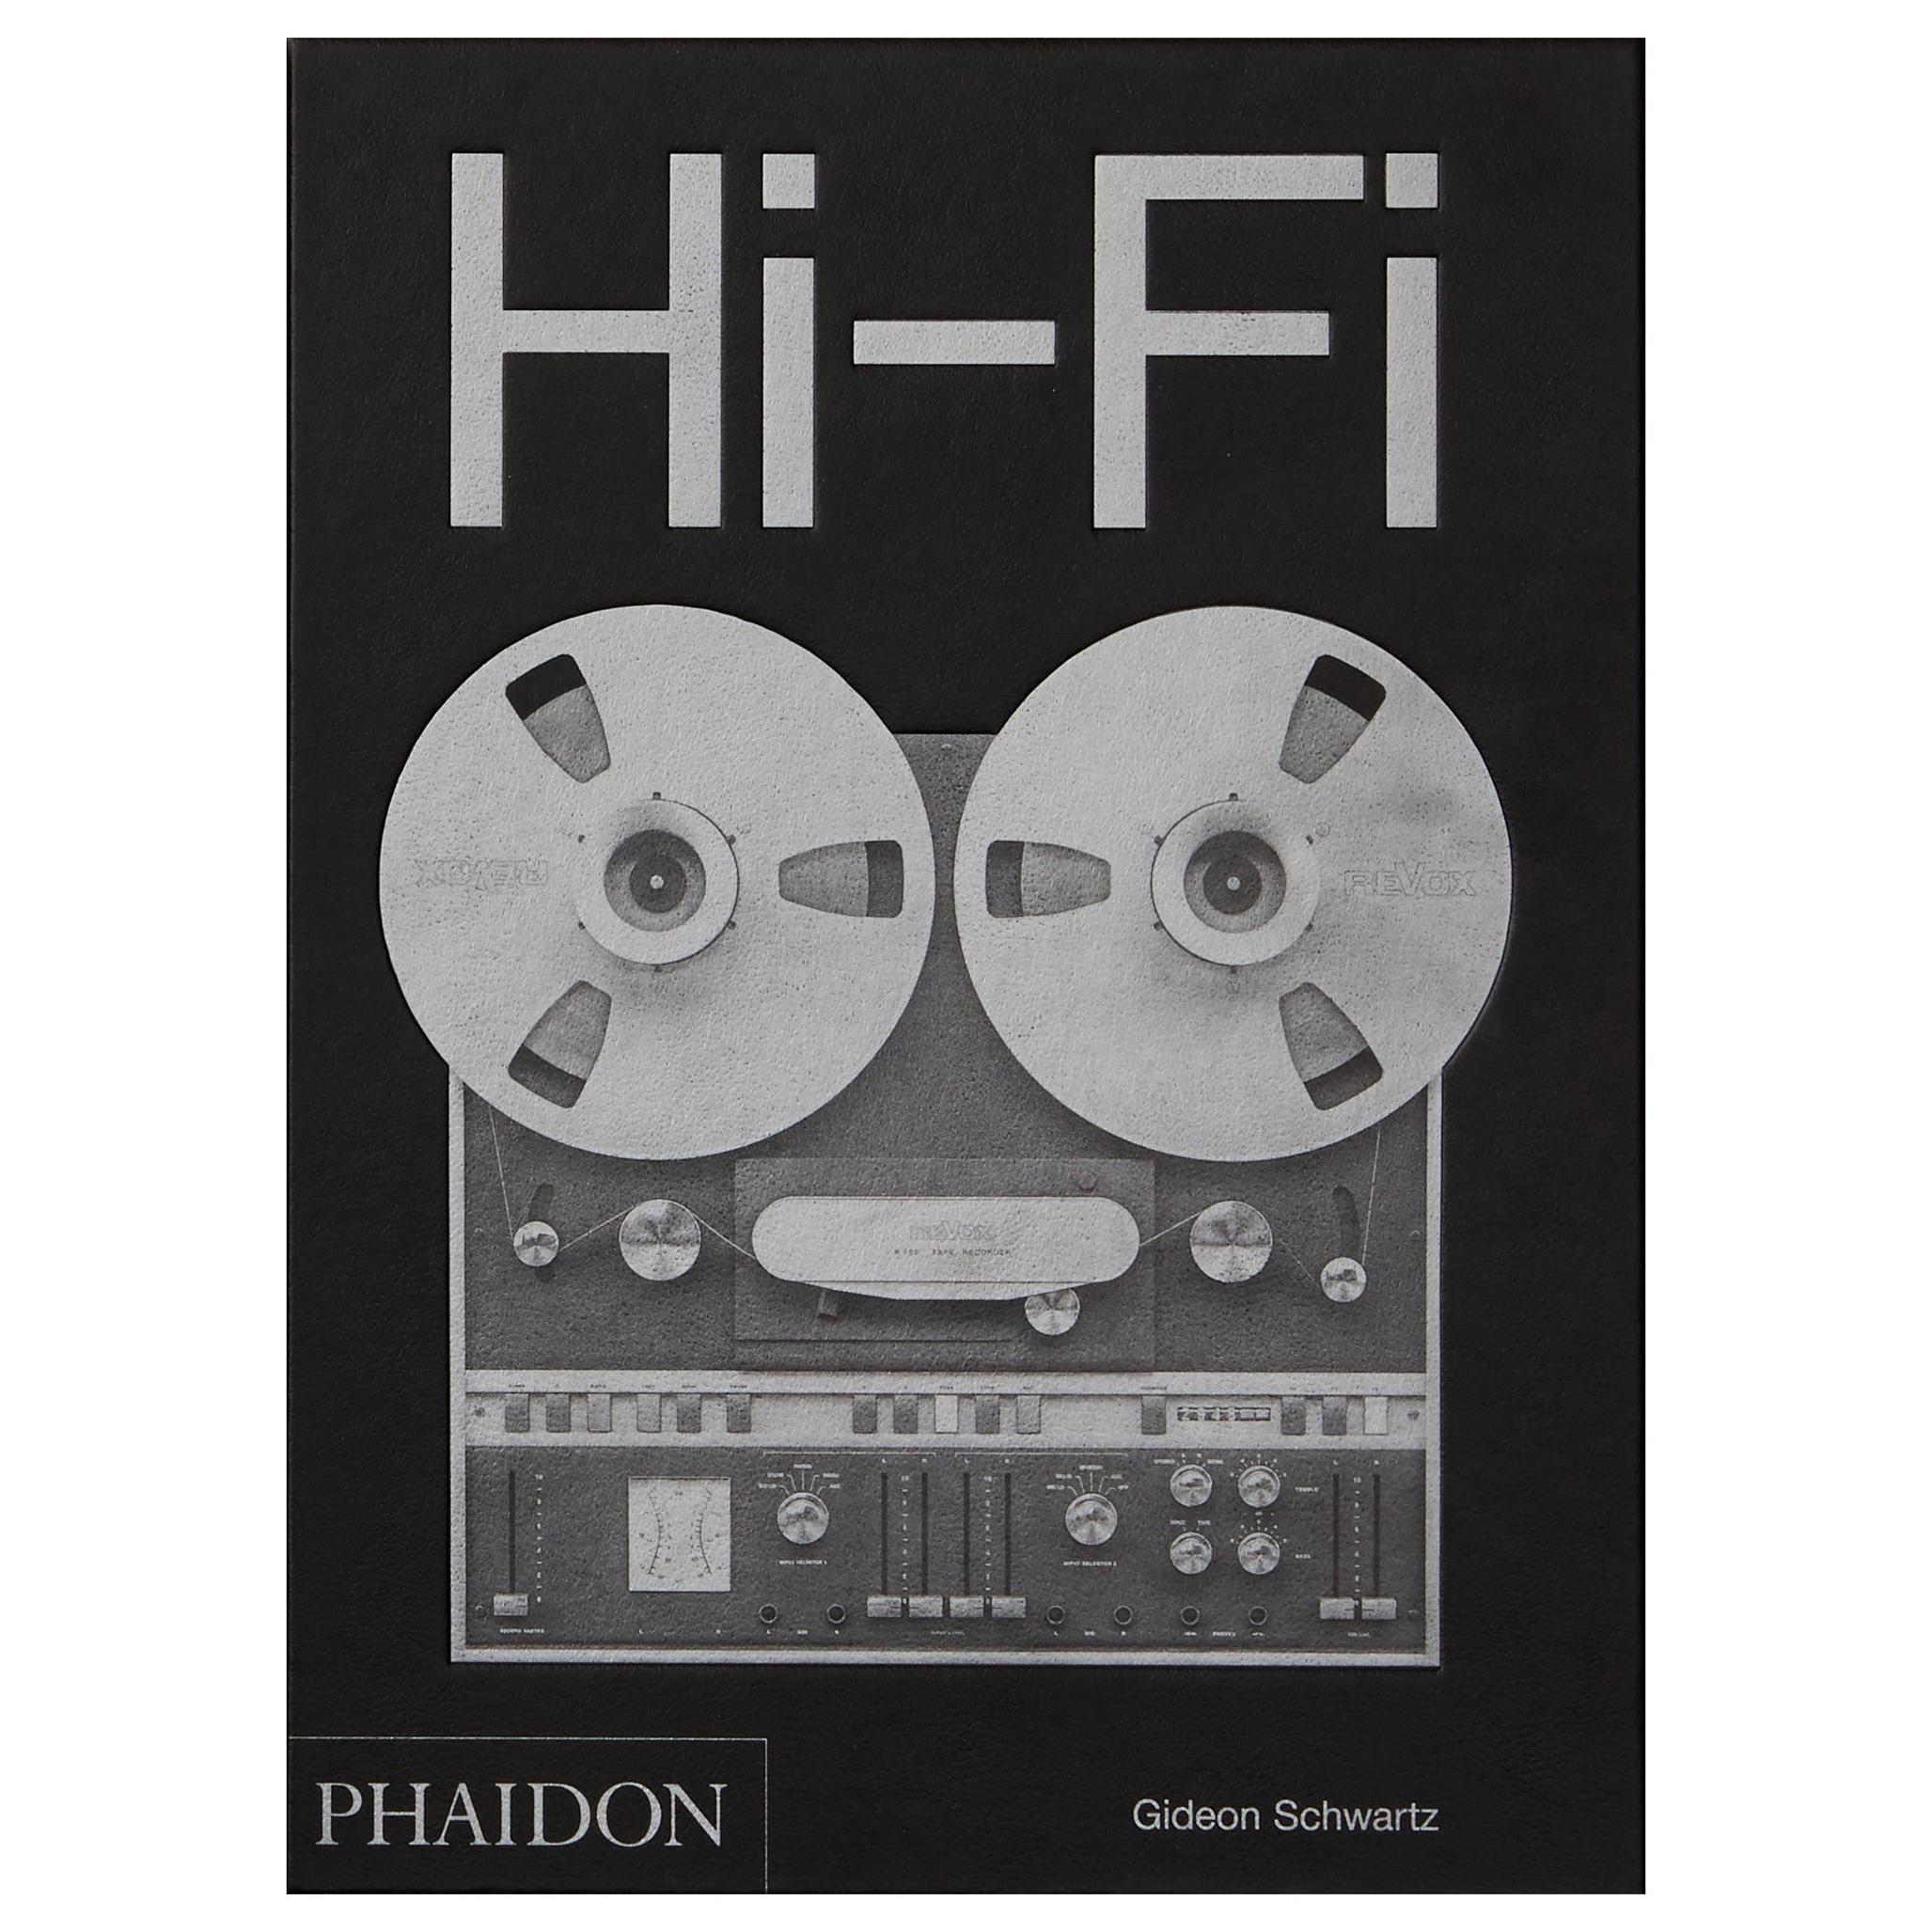 Hi-Fi For Sale